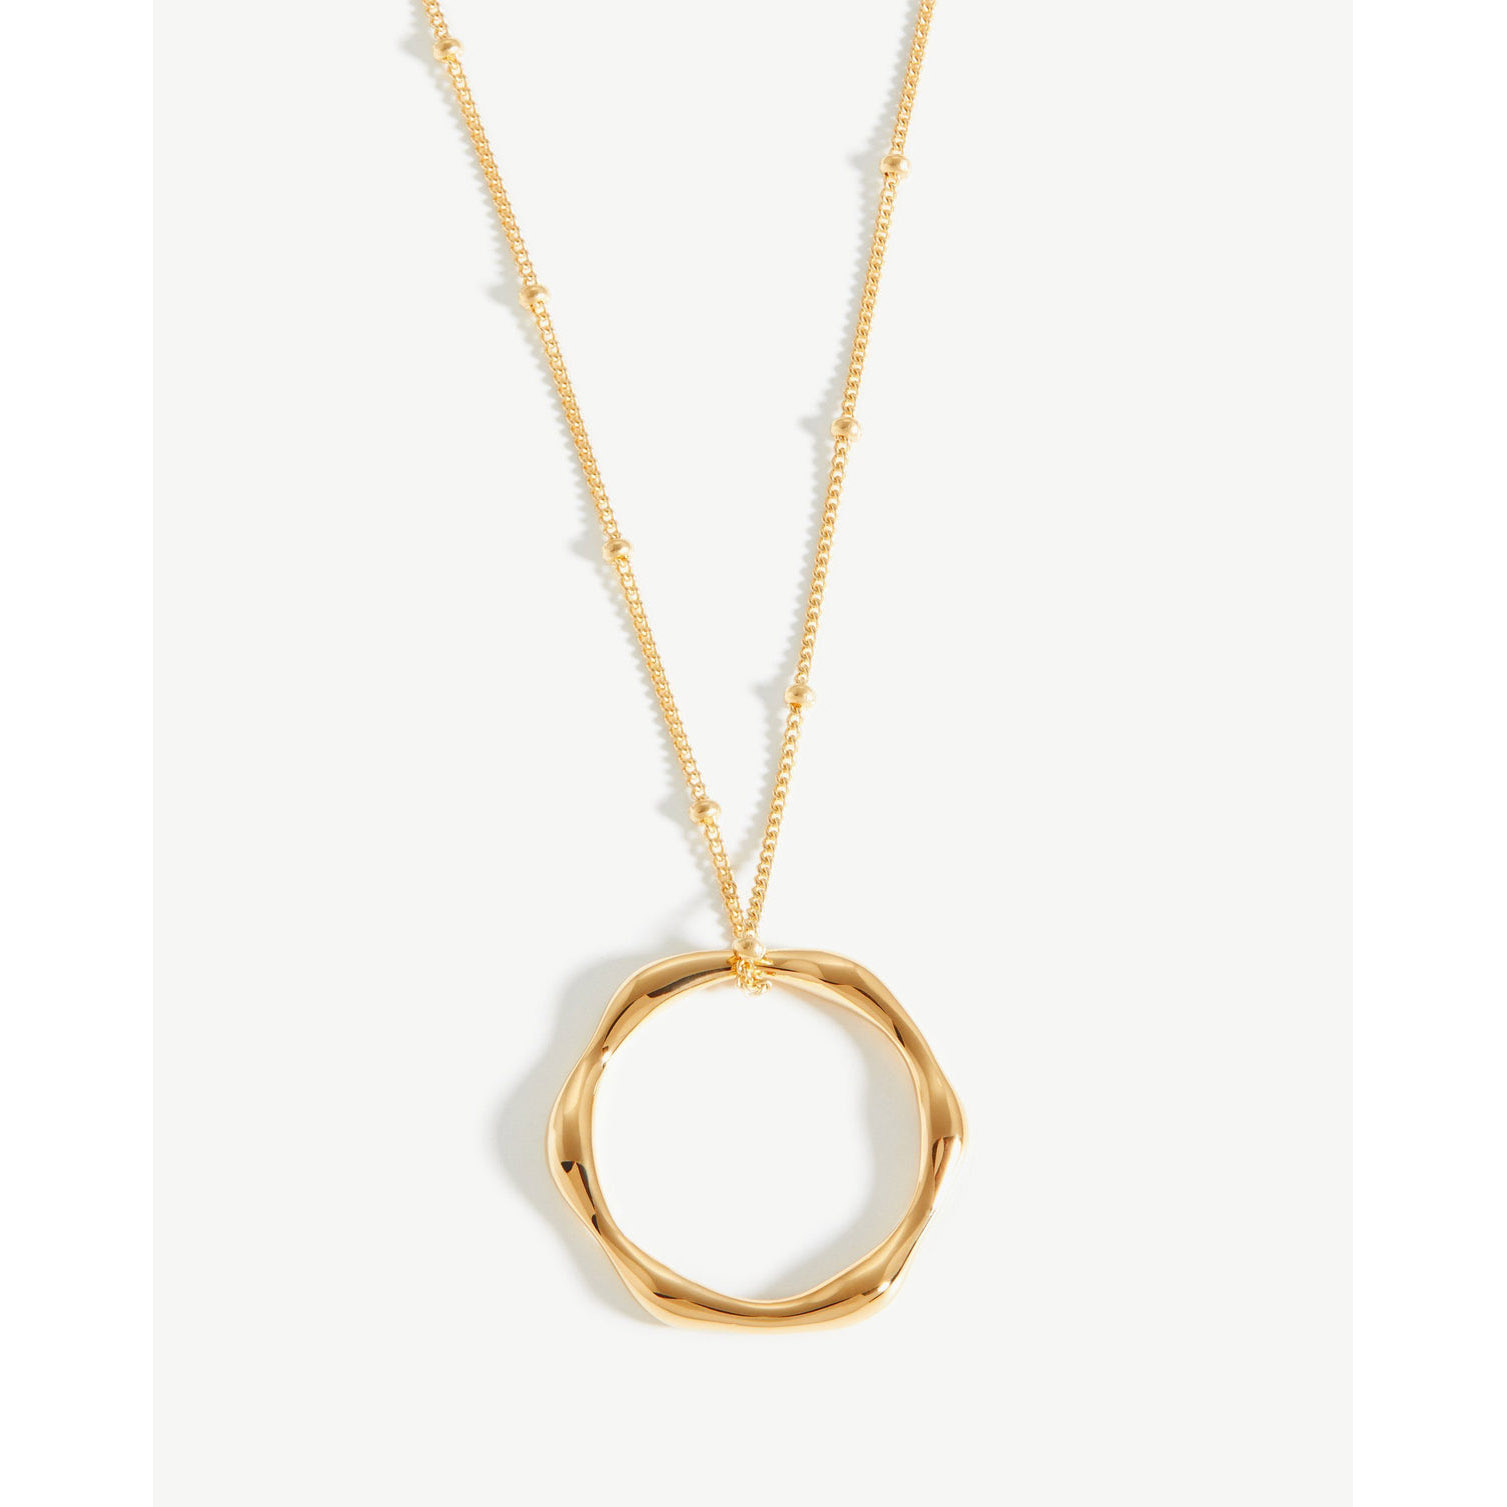 Customize large molten silver  pendant necklaces 18k gold plated vermeil